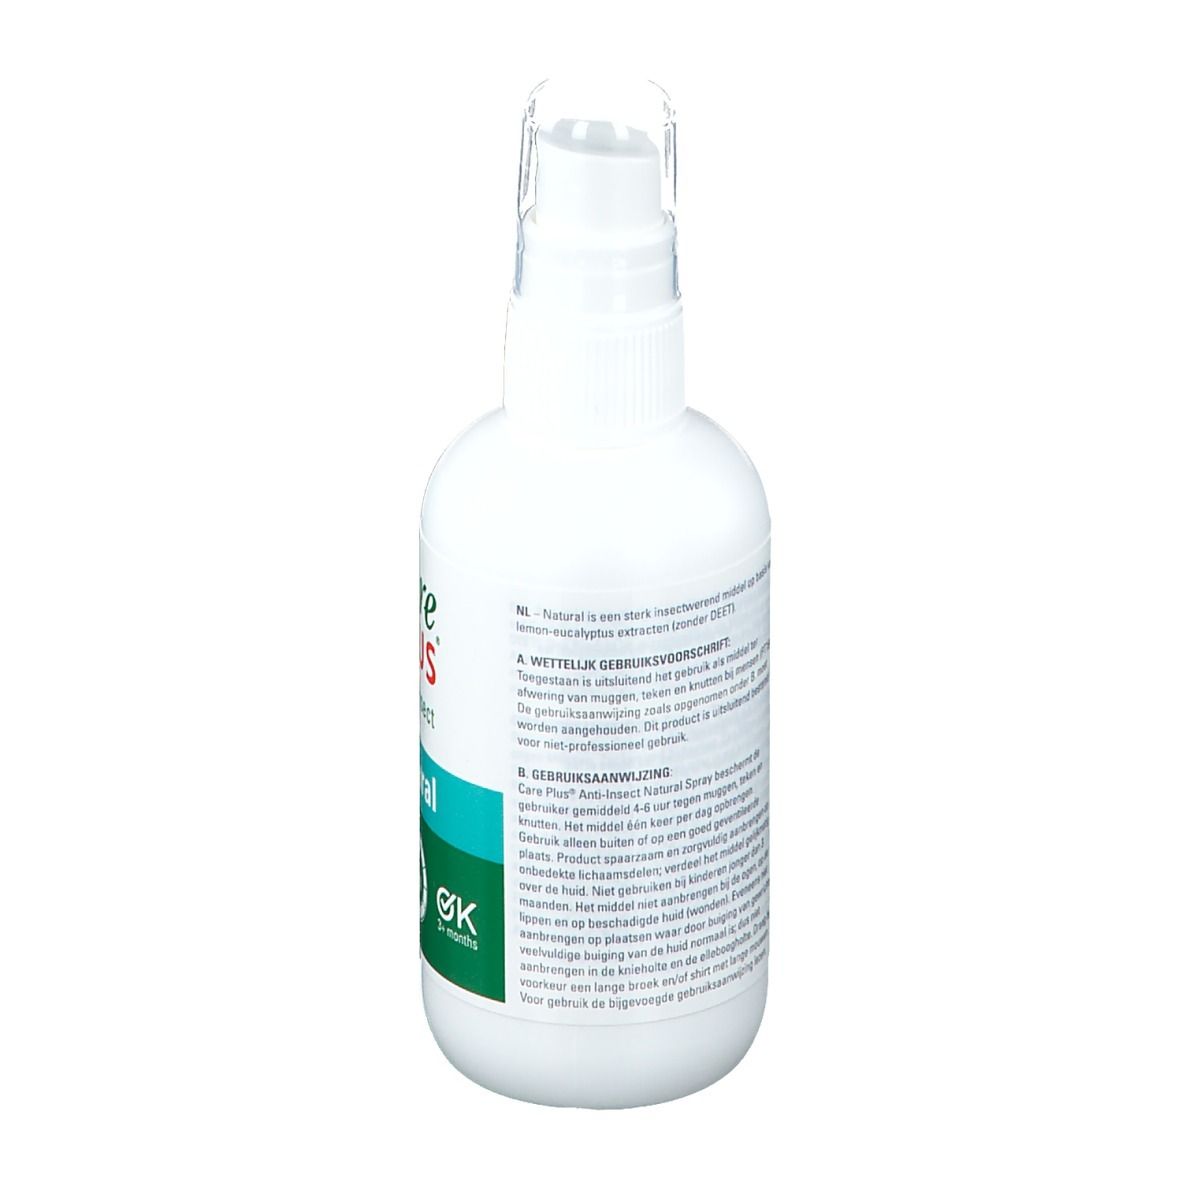 Care Plus Natural Anti-Insect Spray Bio